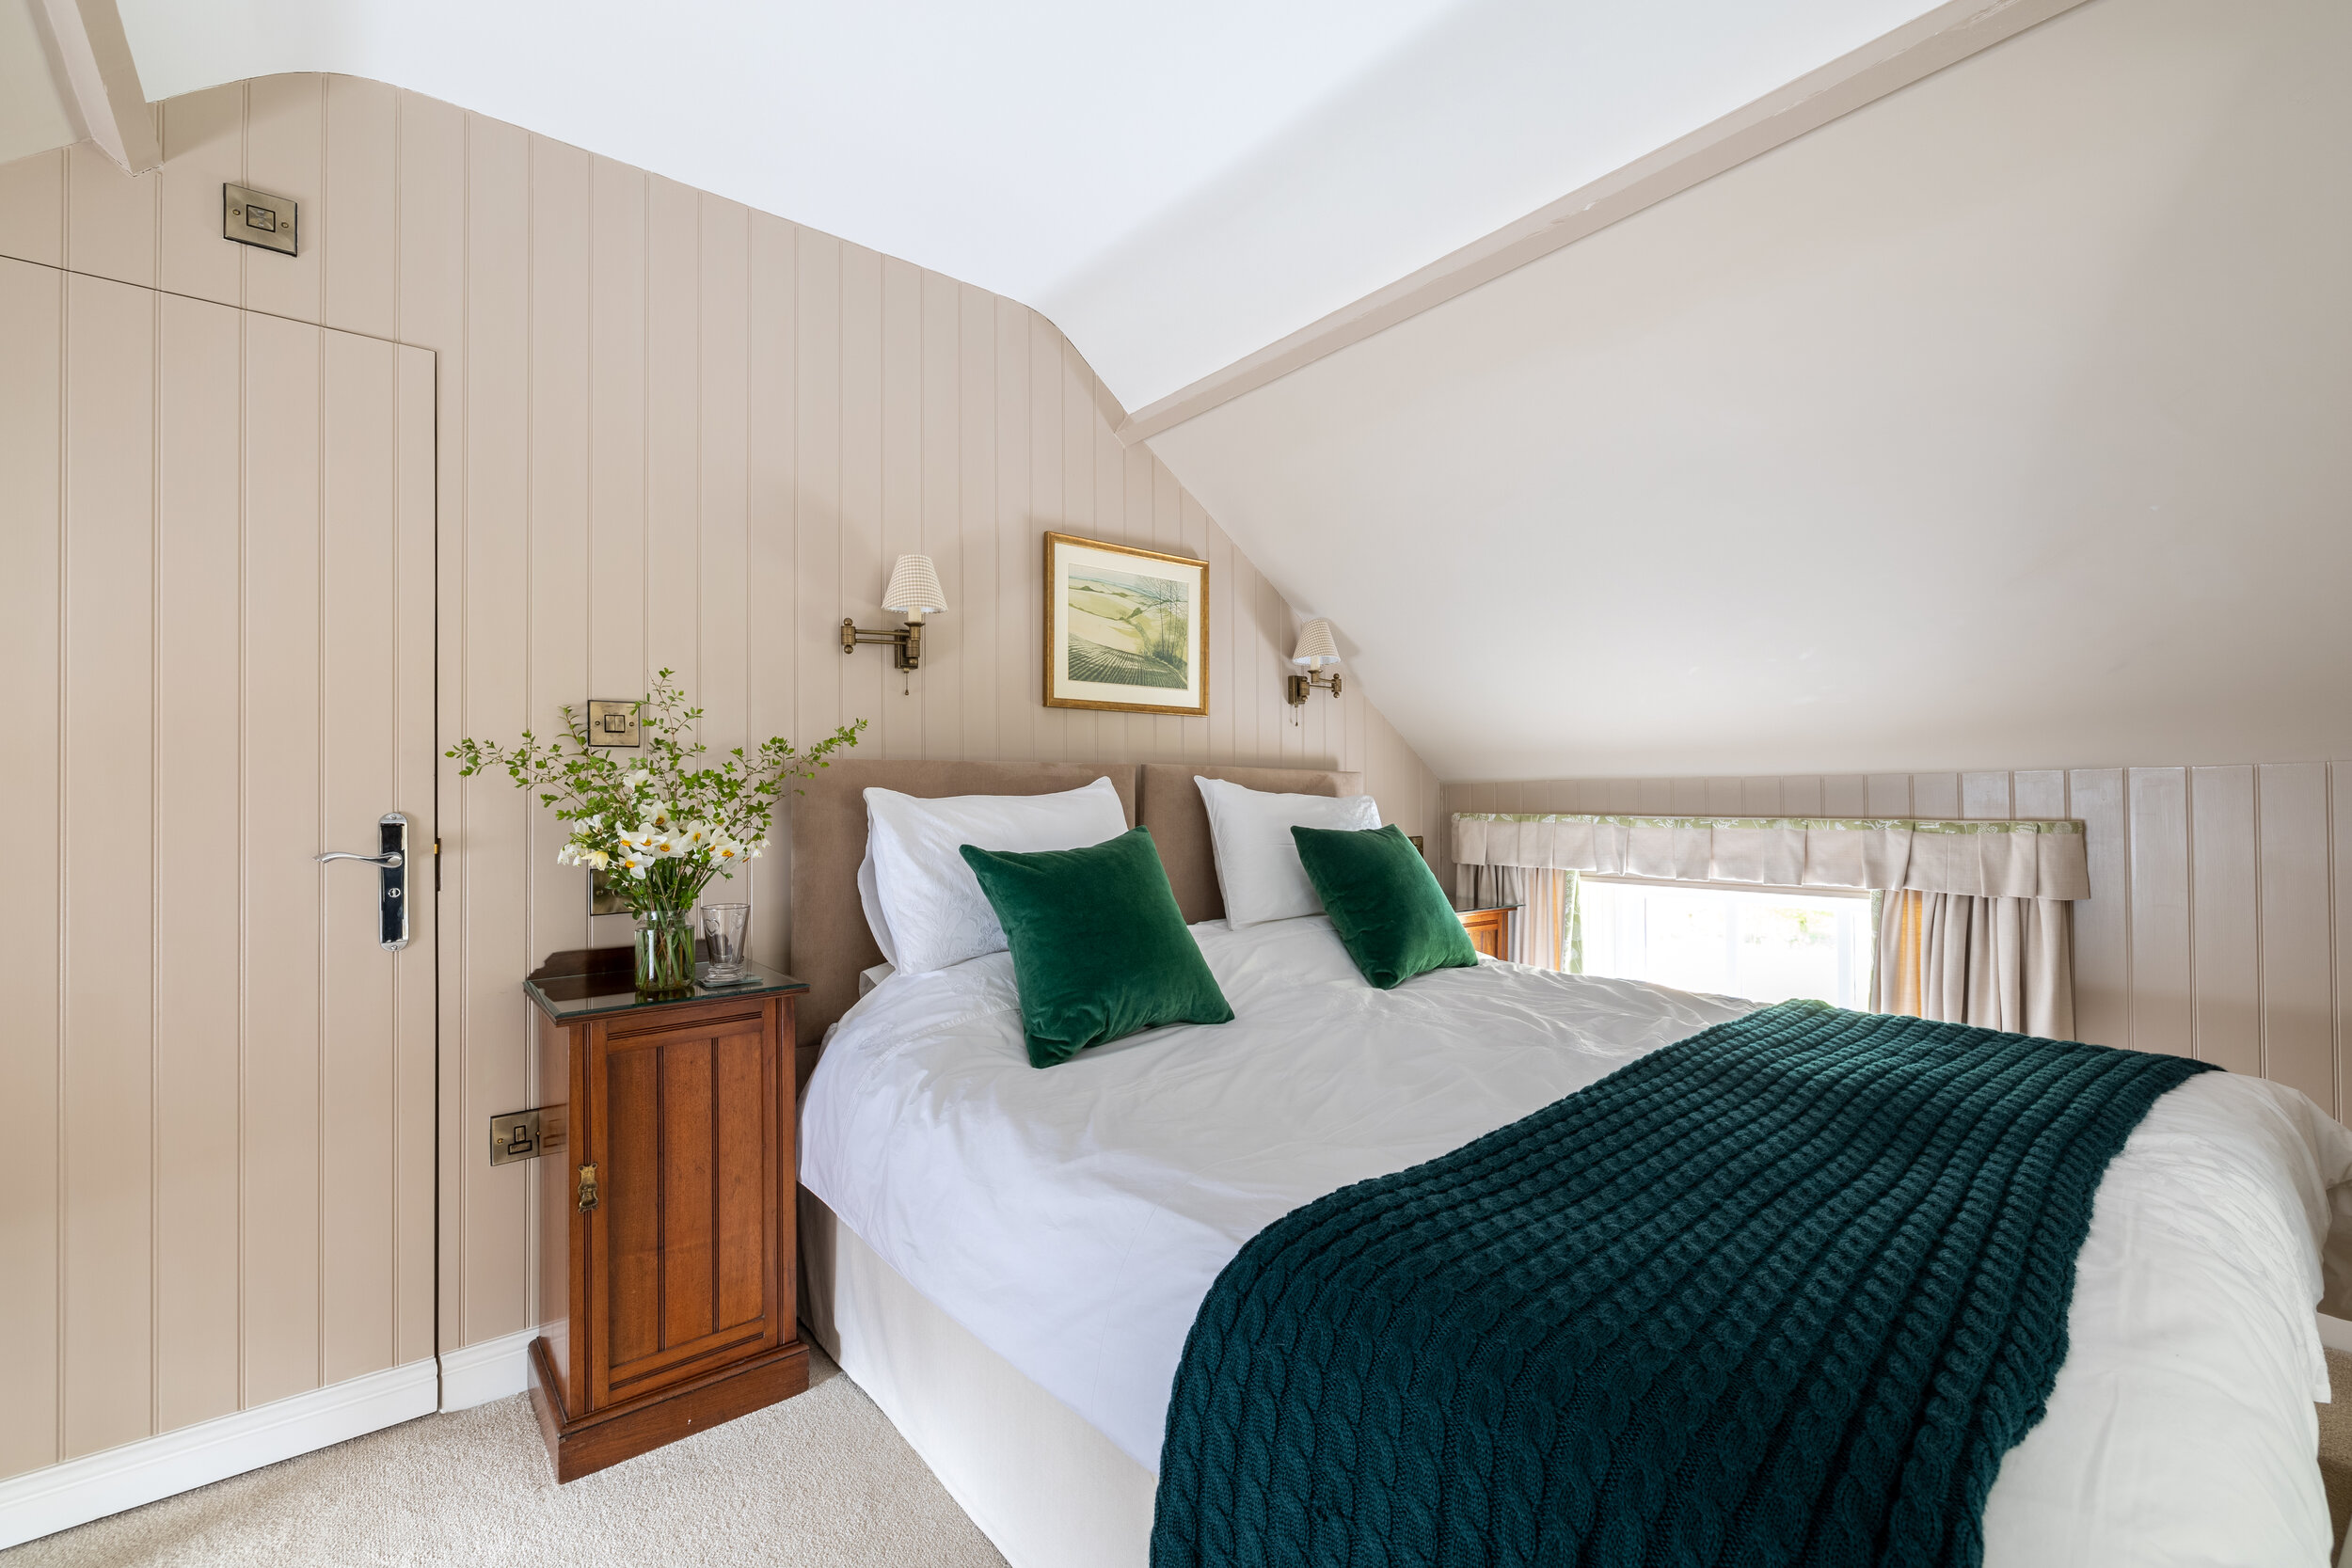 Estate - Hay Loft - bed - April 2021-2.jpg